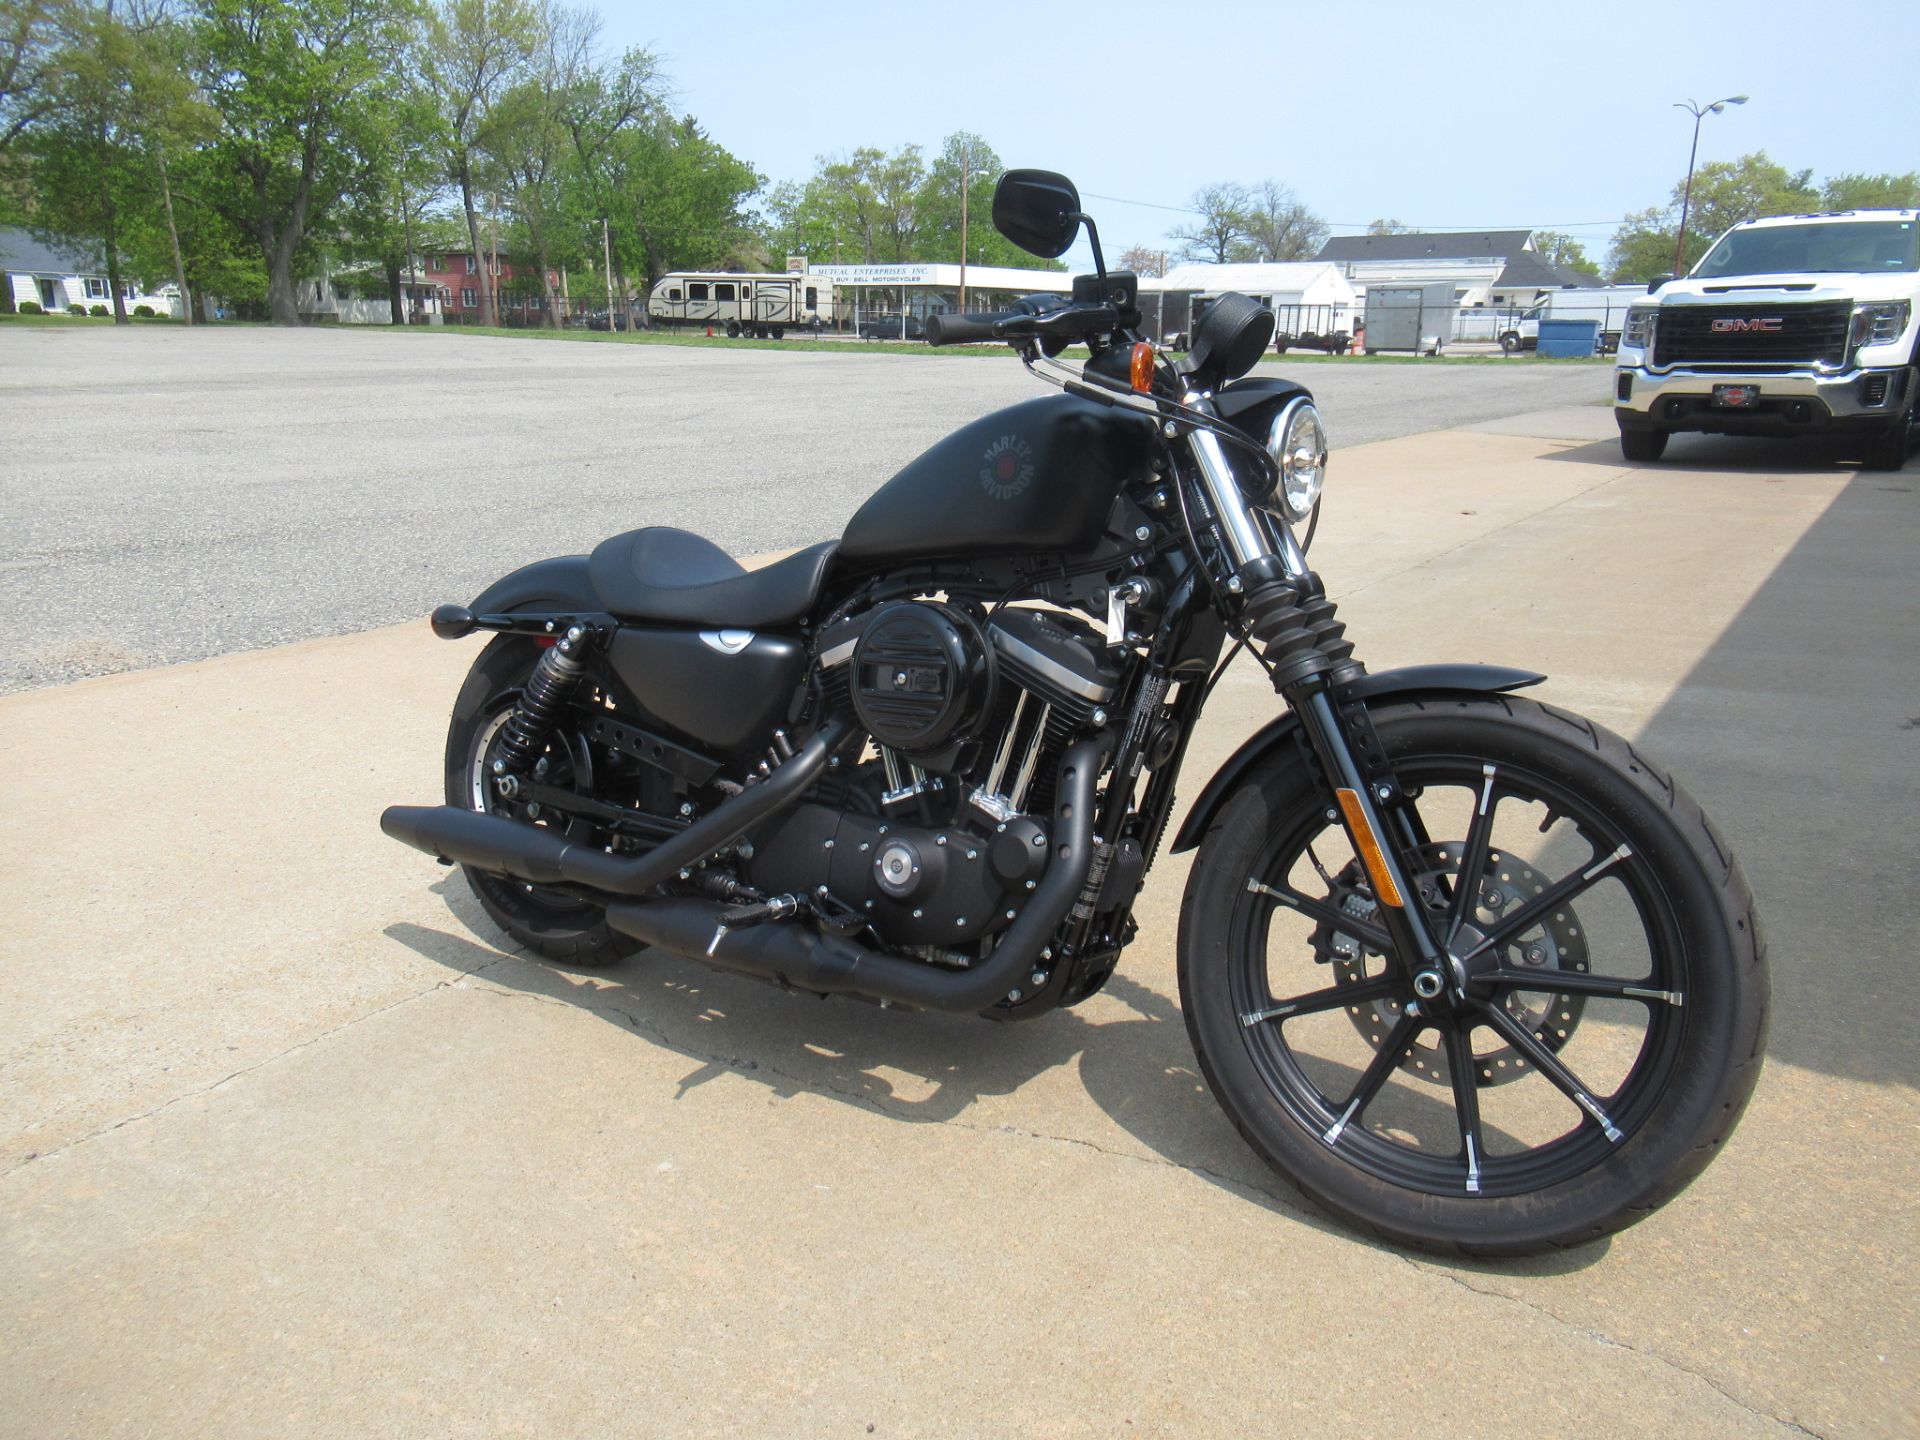 2021 Harley-Davidson Iron 883™ in Springfield, Massachusetts - Photo 2